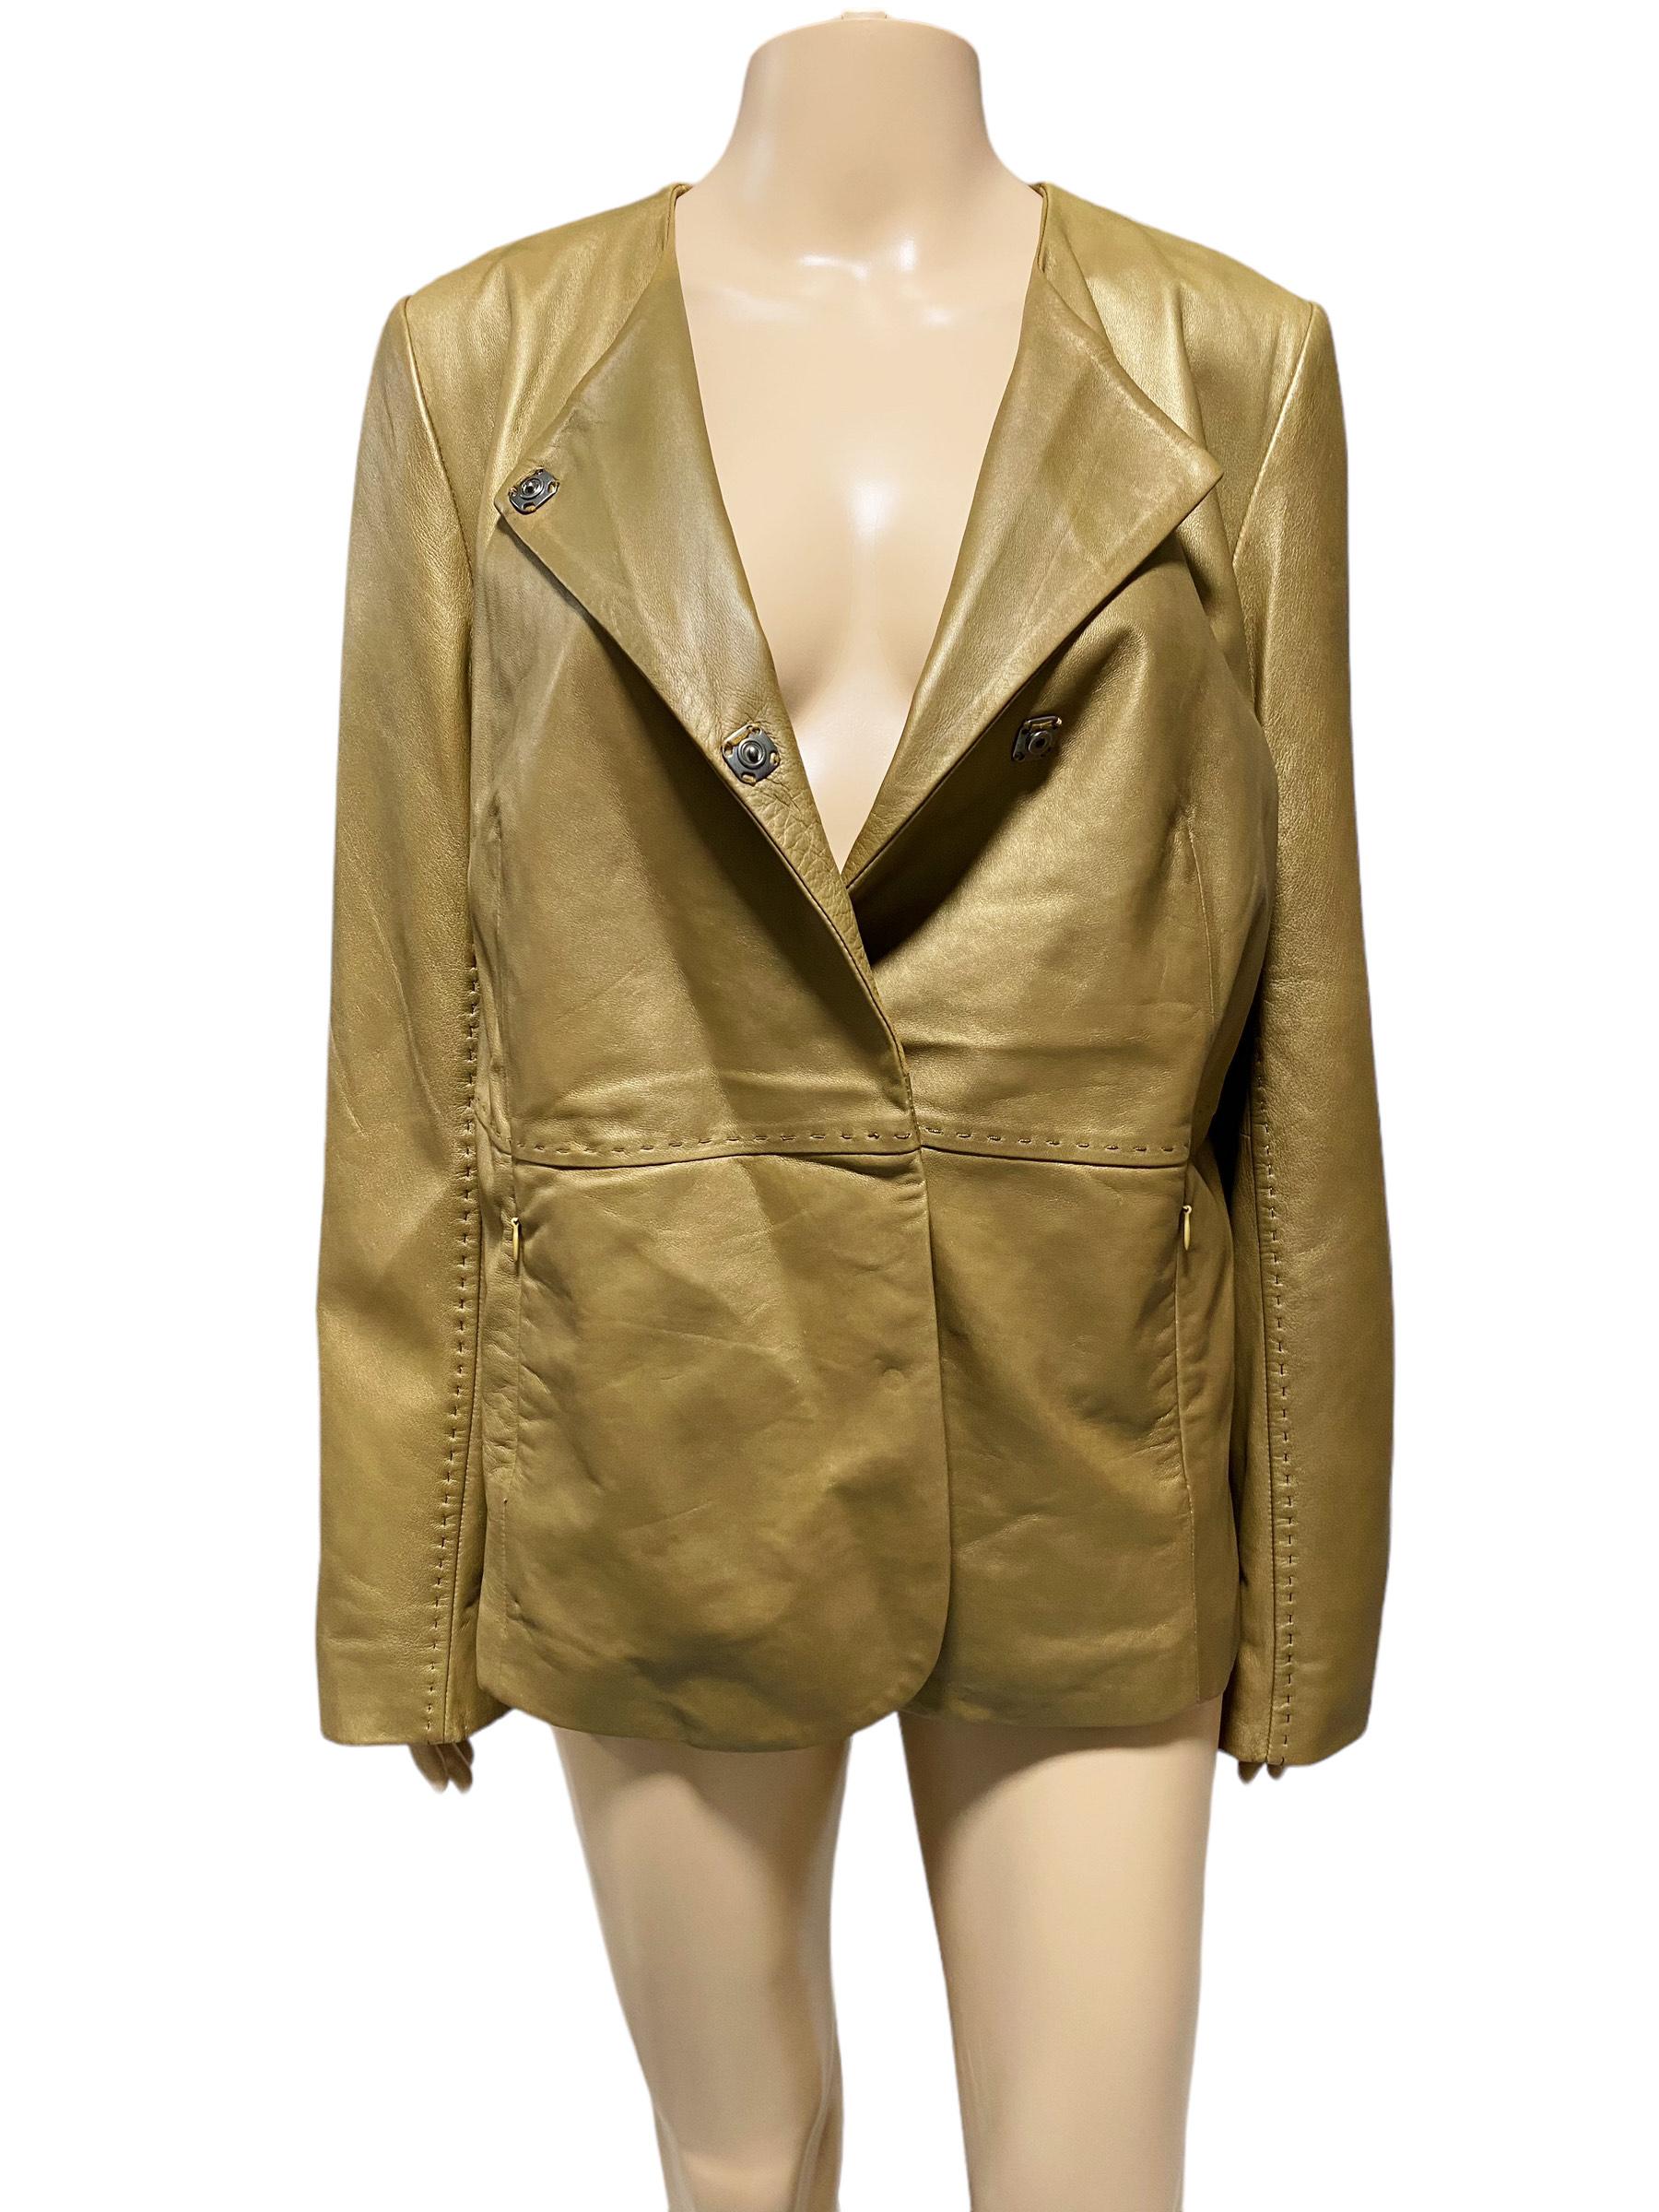 Marina Rinaldi x Max Mara Genuine Leather Jacket - Limited Edition For Sale 3